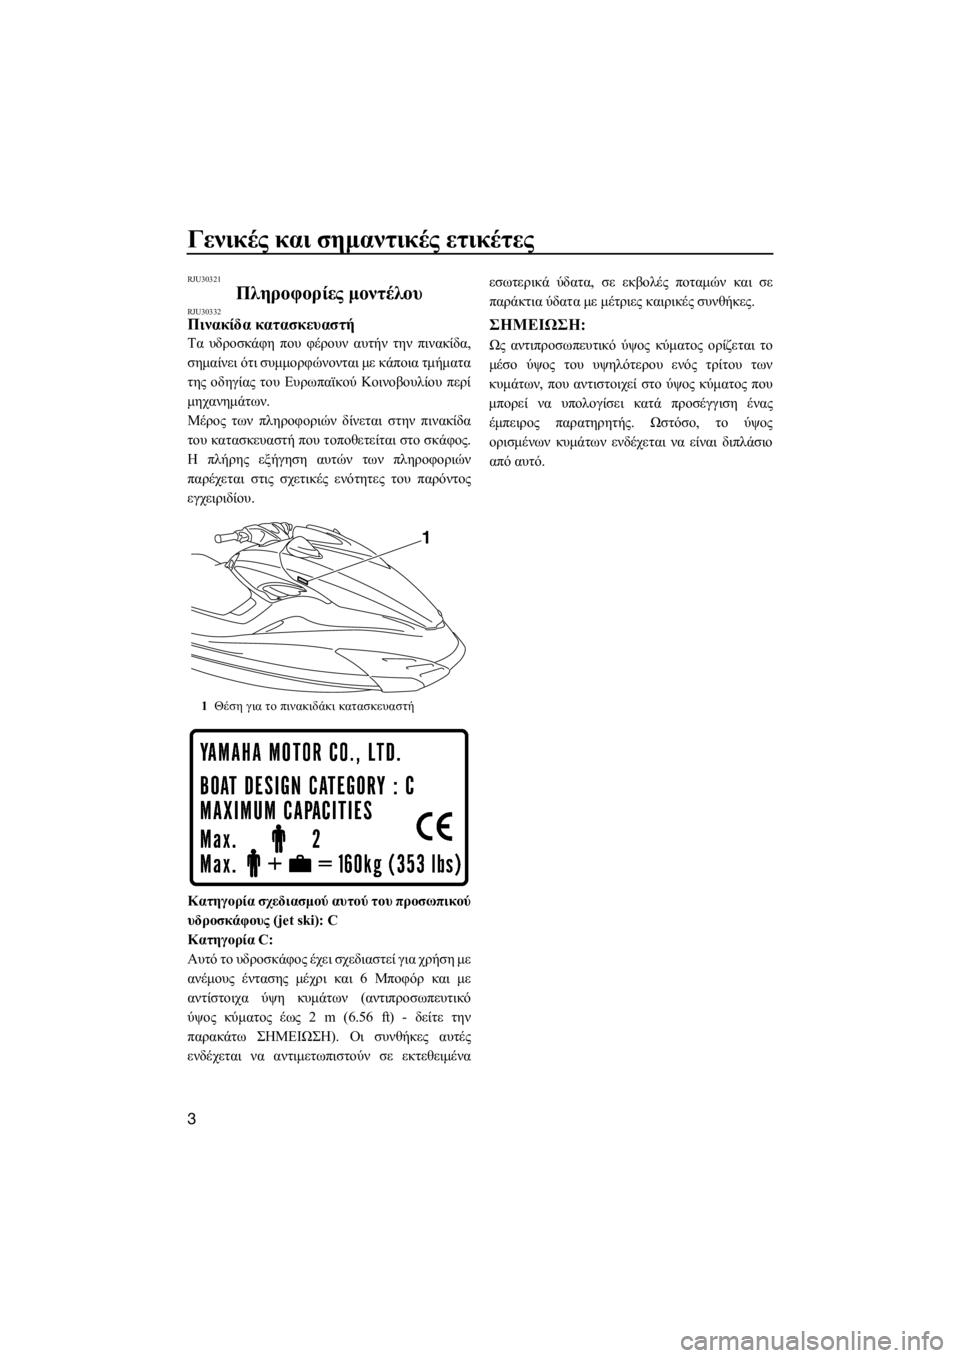 YAMAHA FZR 2015  ΟΔΗΓΌΣ ΧΡΉΣΗΣ (in Greek) Γενικές και σημαντικές ετικέτες
3
RJU30321
Πληροφορίες μοντέλουRJU30332Πινακίδα κατασκευαστή
Τα υδροσκάφη που φέρο�